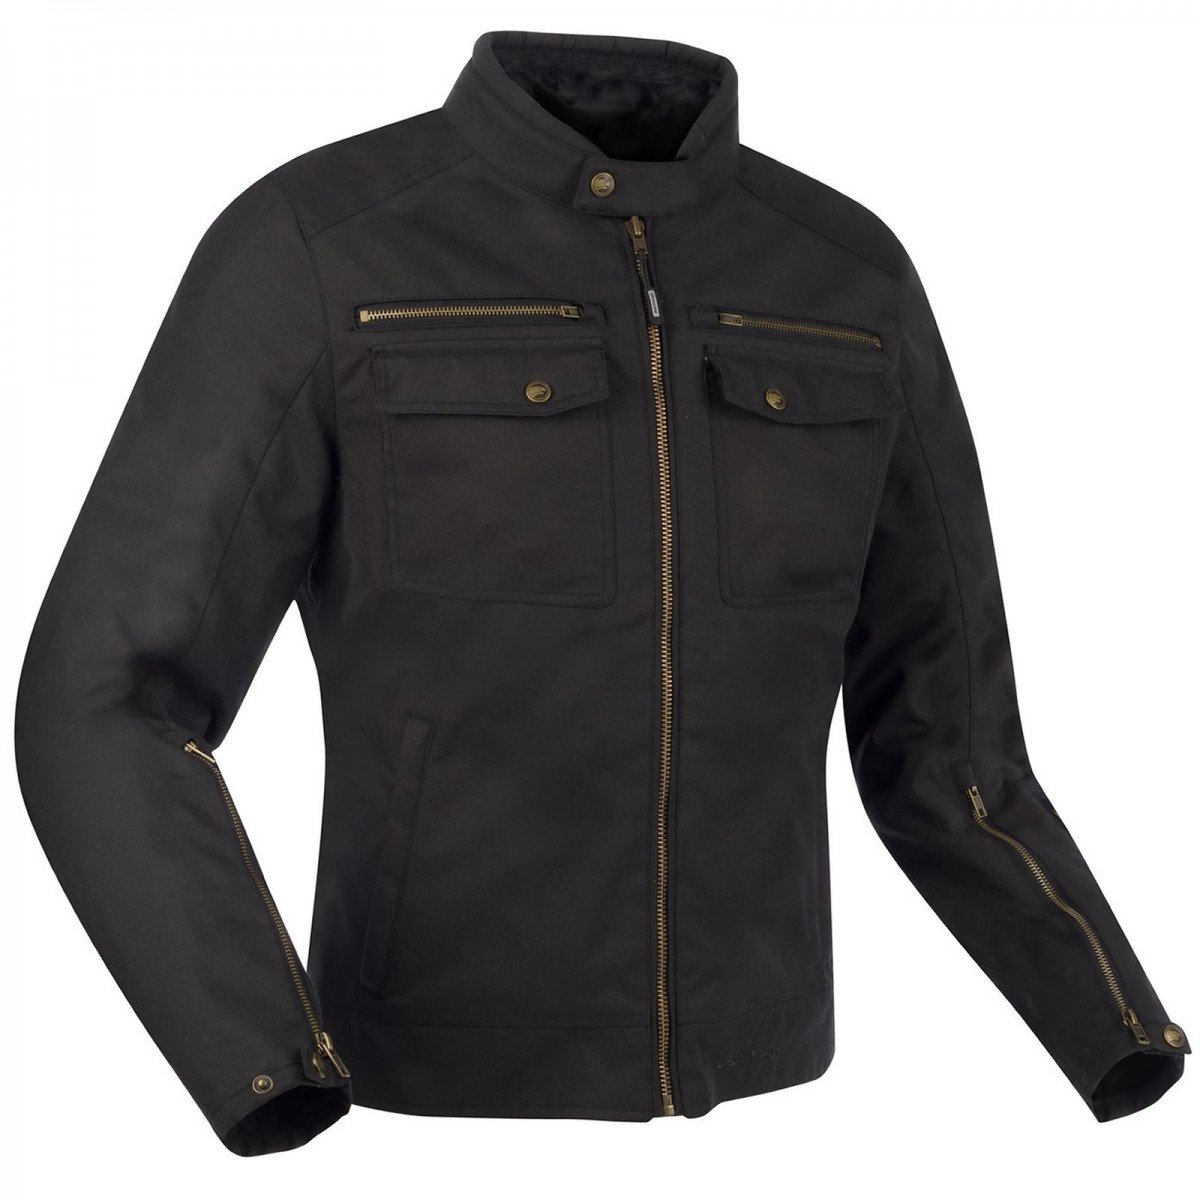 Image of Bering Winton Jacket Black Size S ID 3660815161944